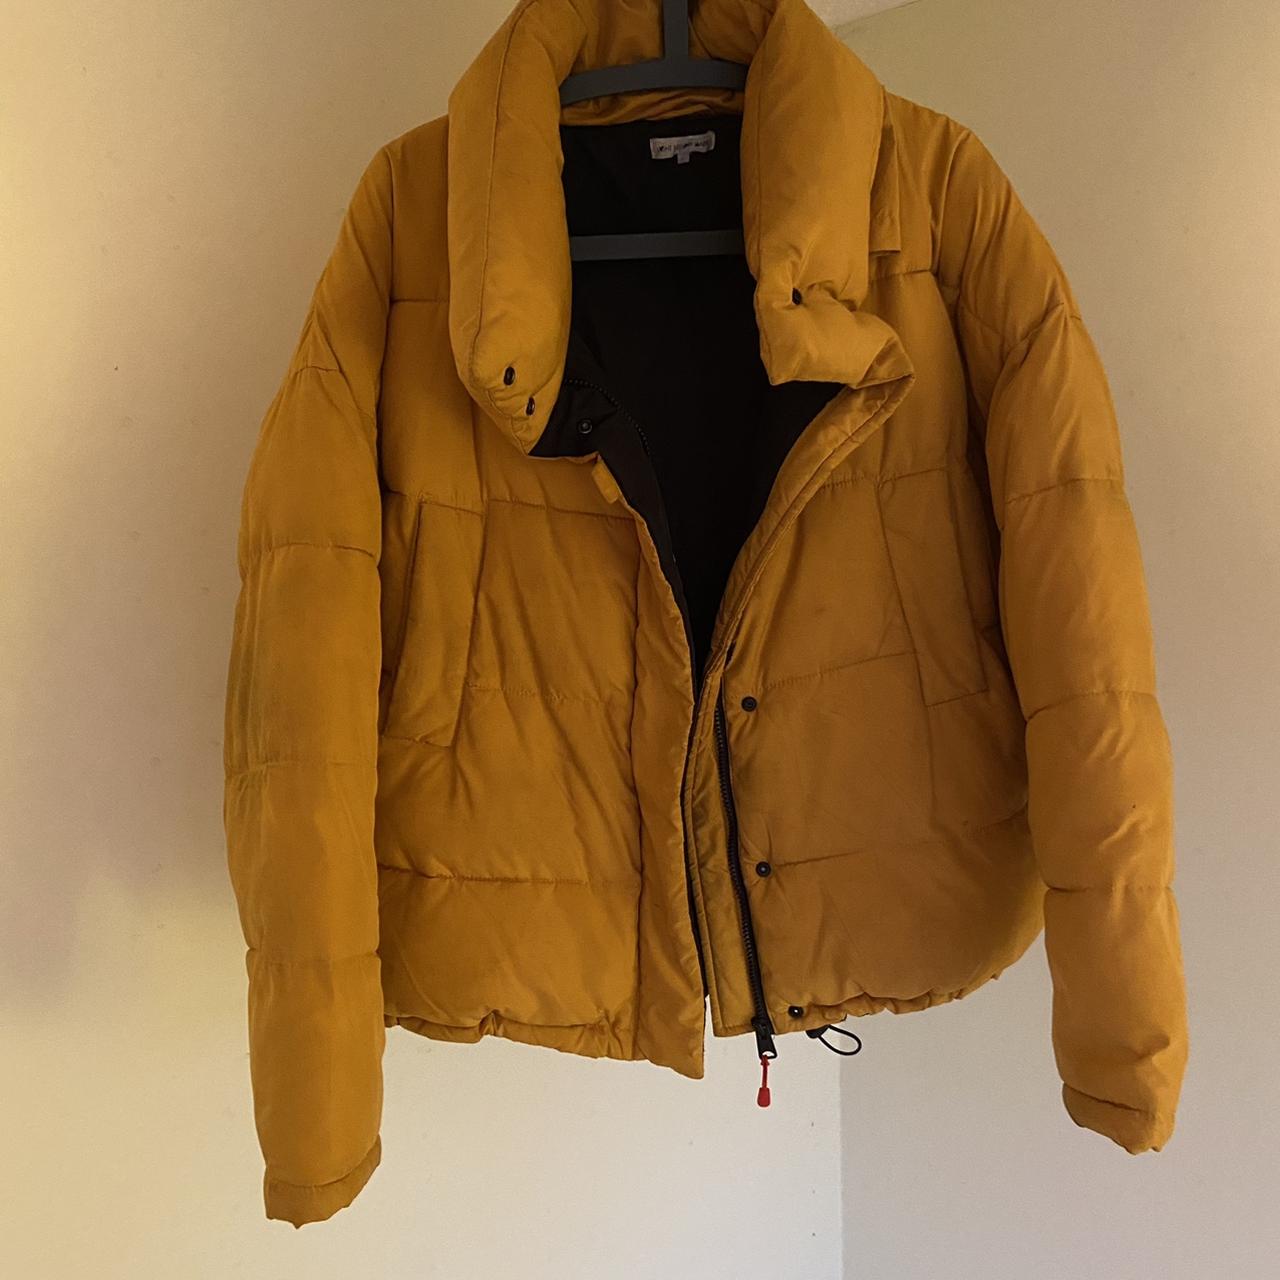 Urban Outfitters Women's Yellow Jacket | Depop